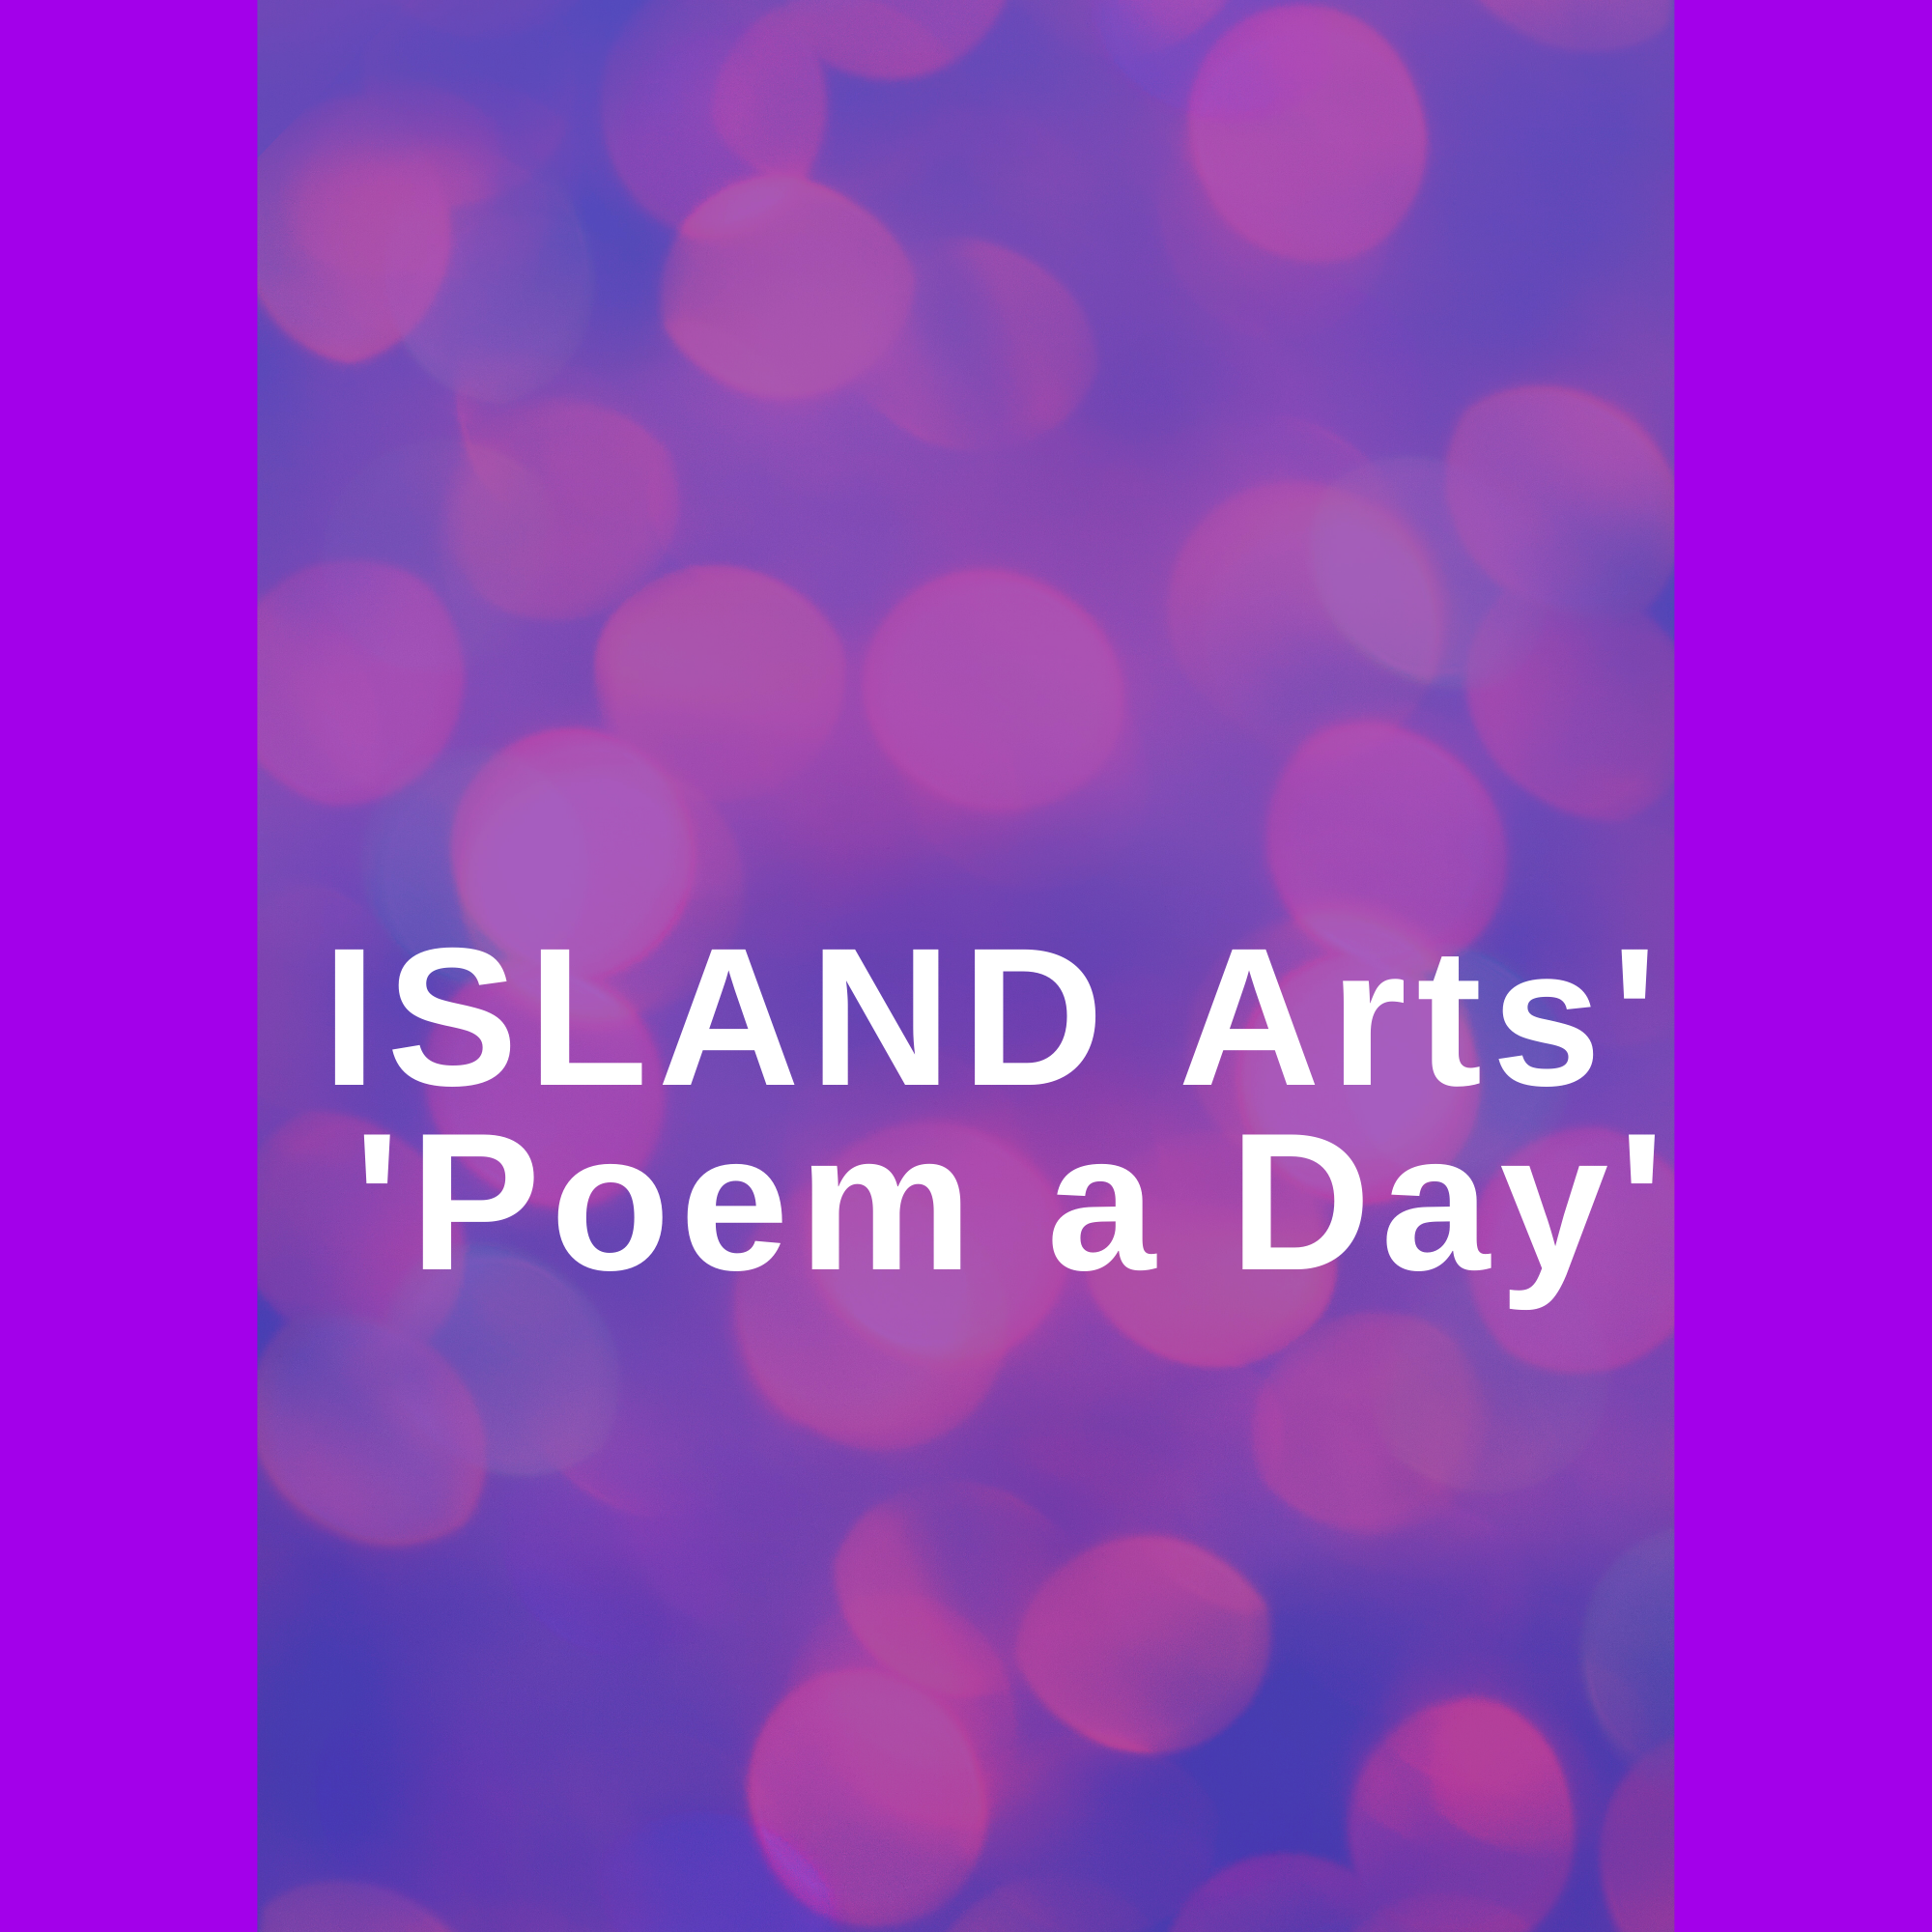 ISLAND Arts’ ‘Poem a Day’ Seachtain na Gaeilge / Irish Language Week Festival 